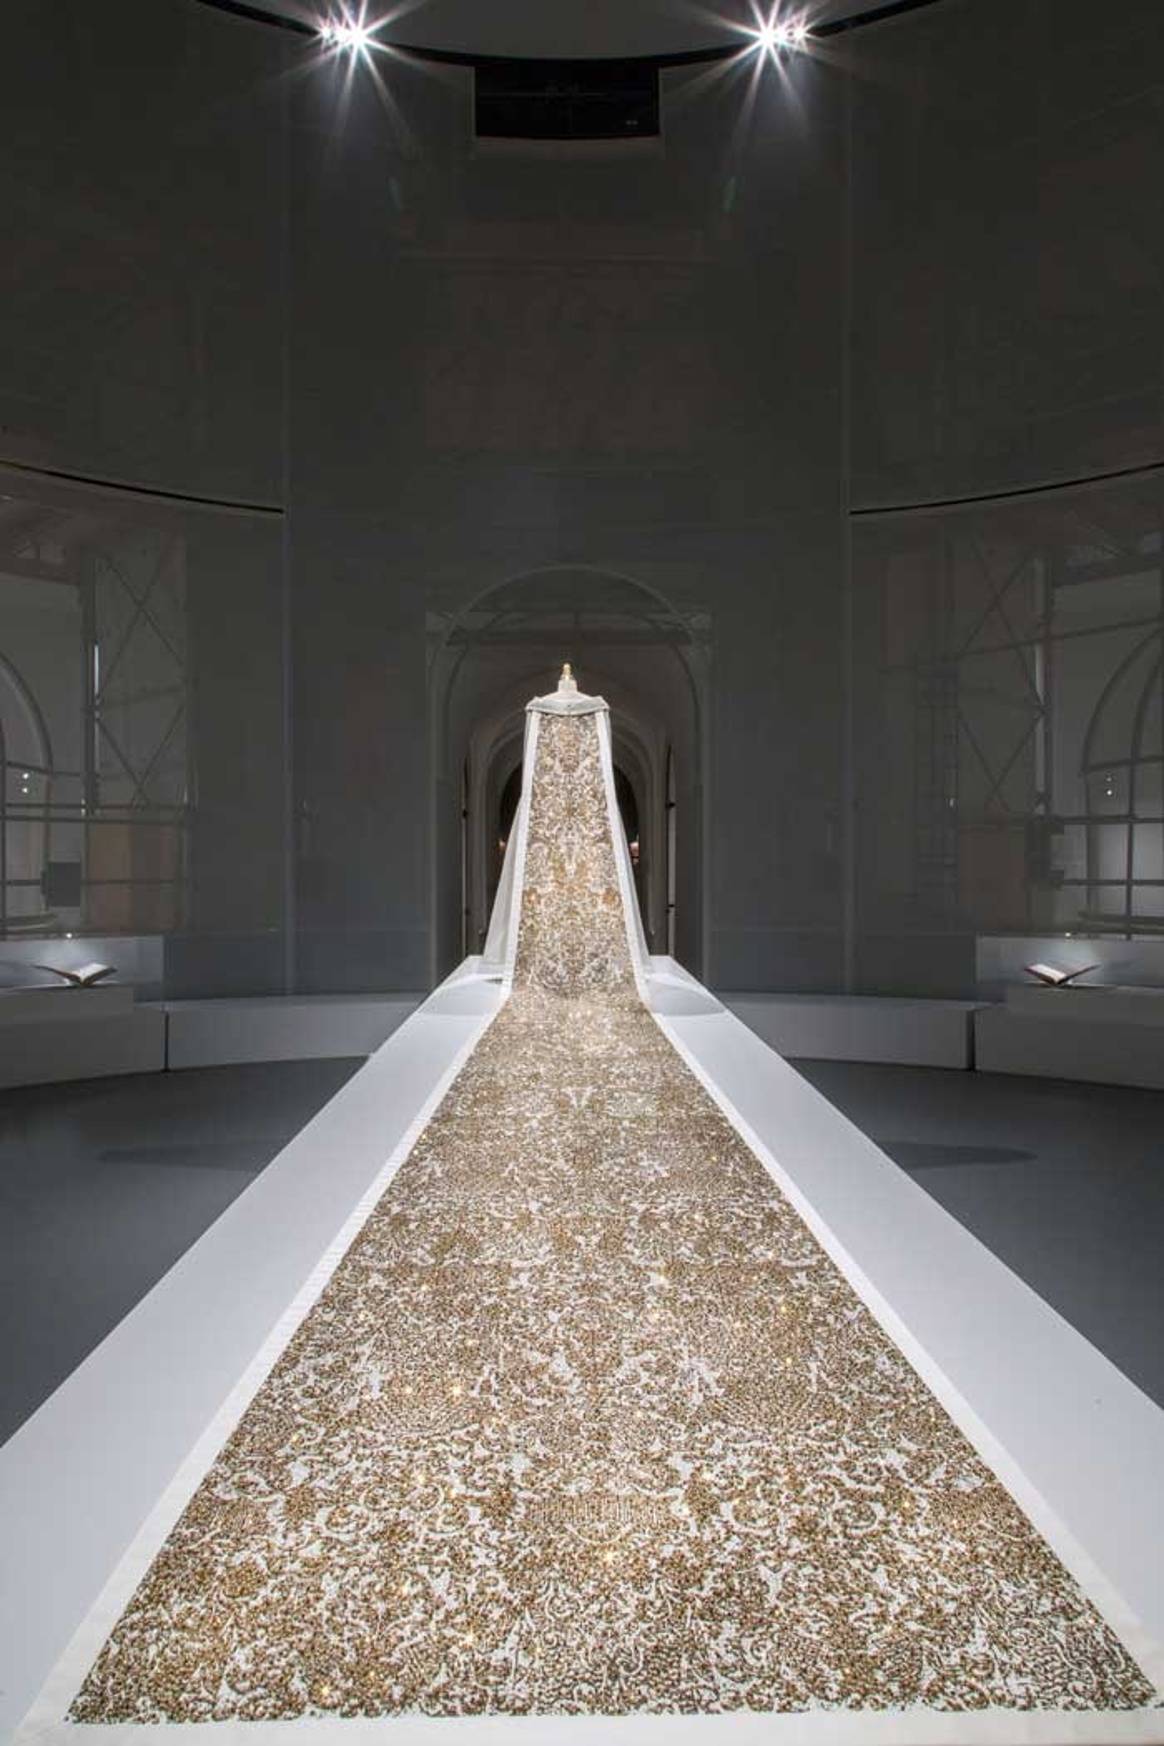 The Met's Manus x Machina examines fashion and technology